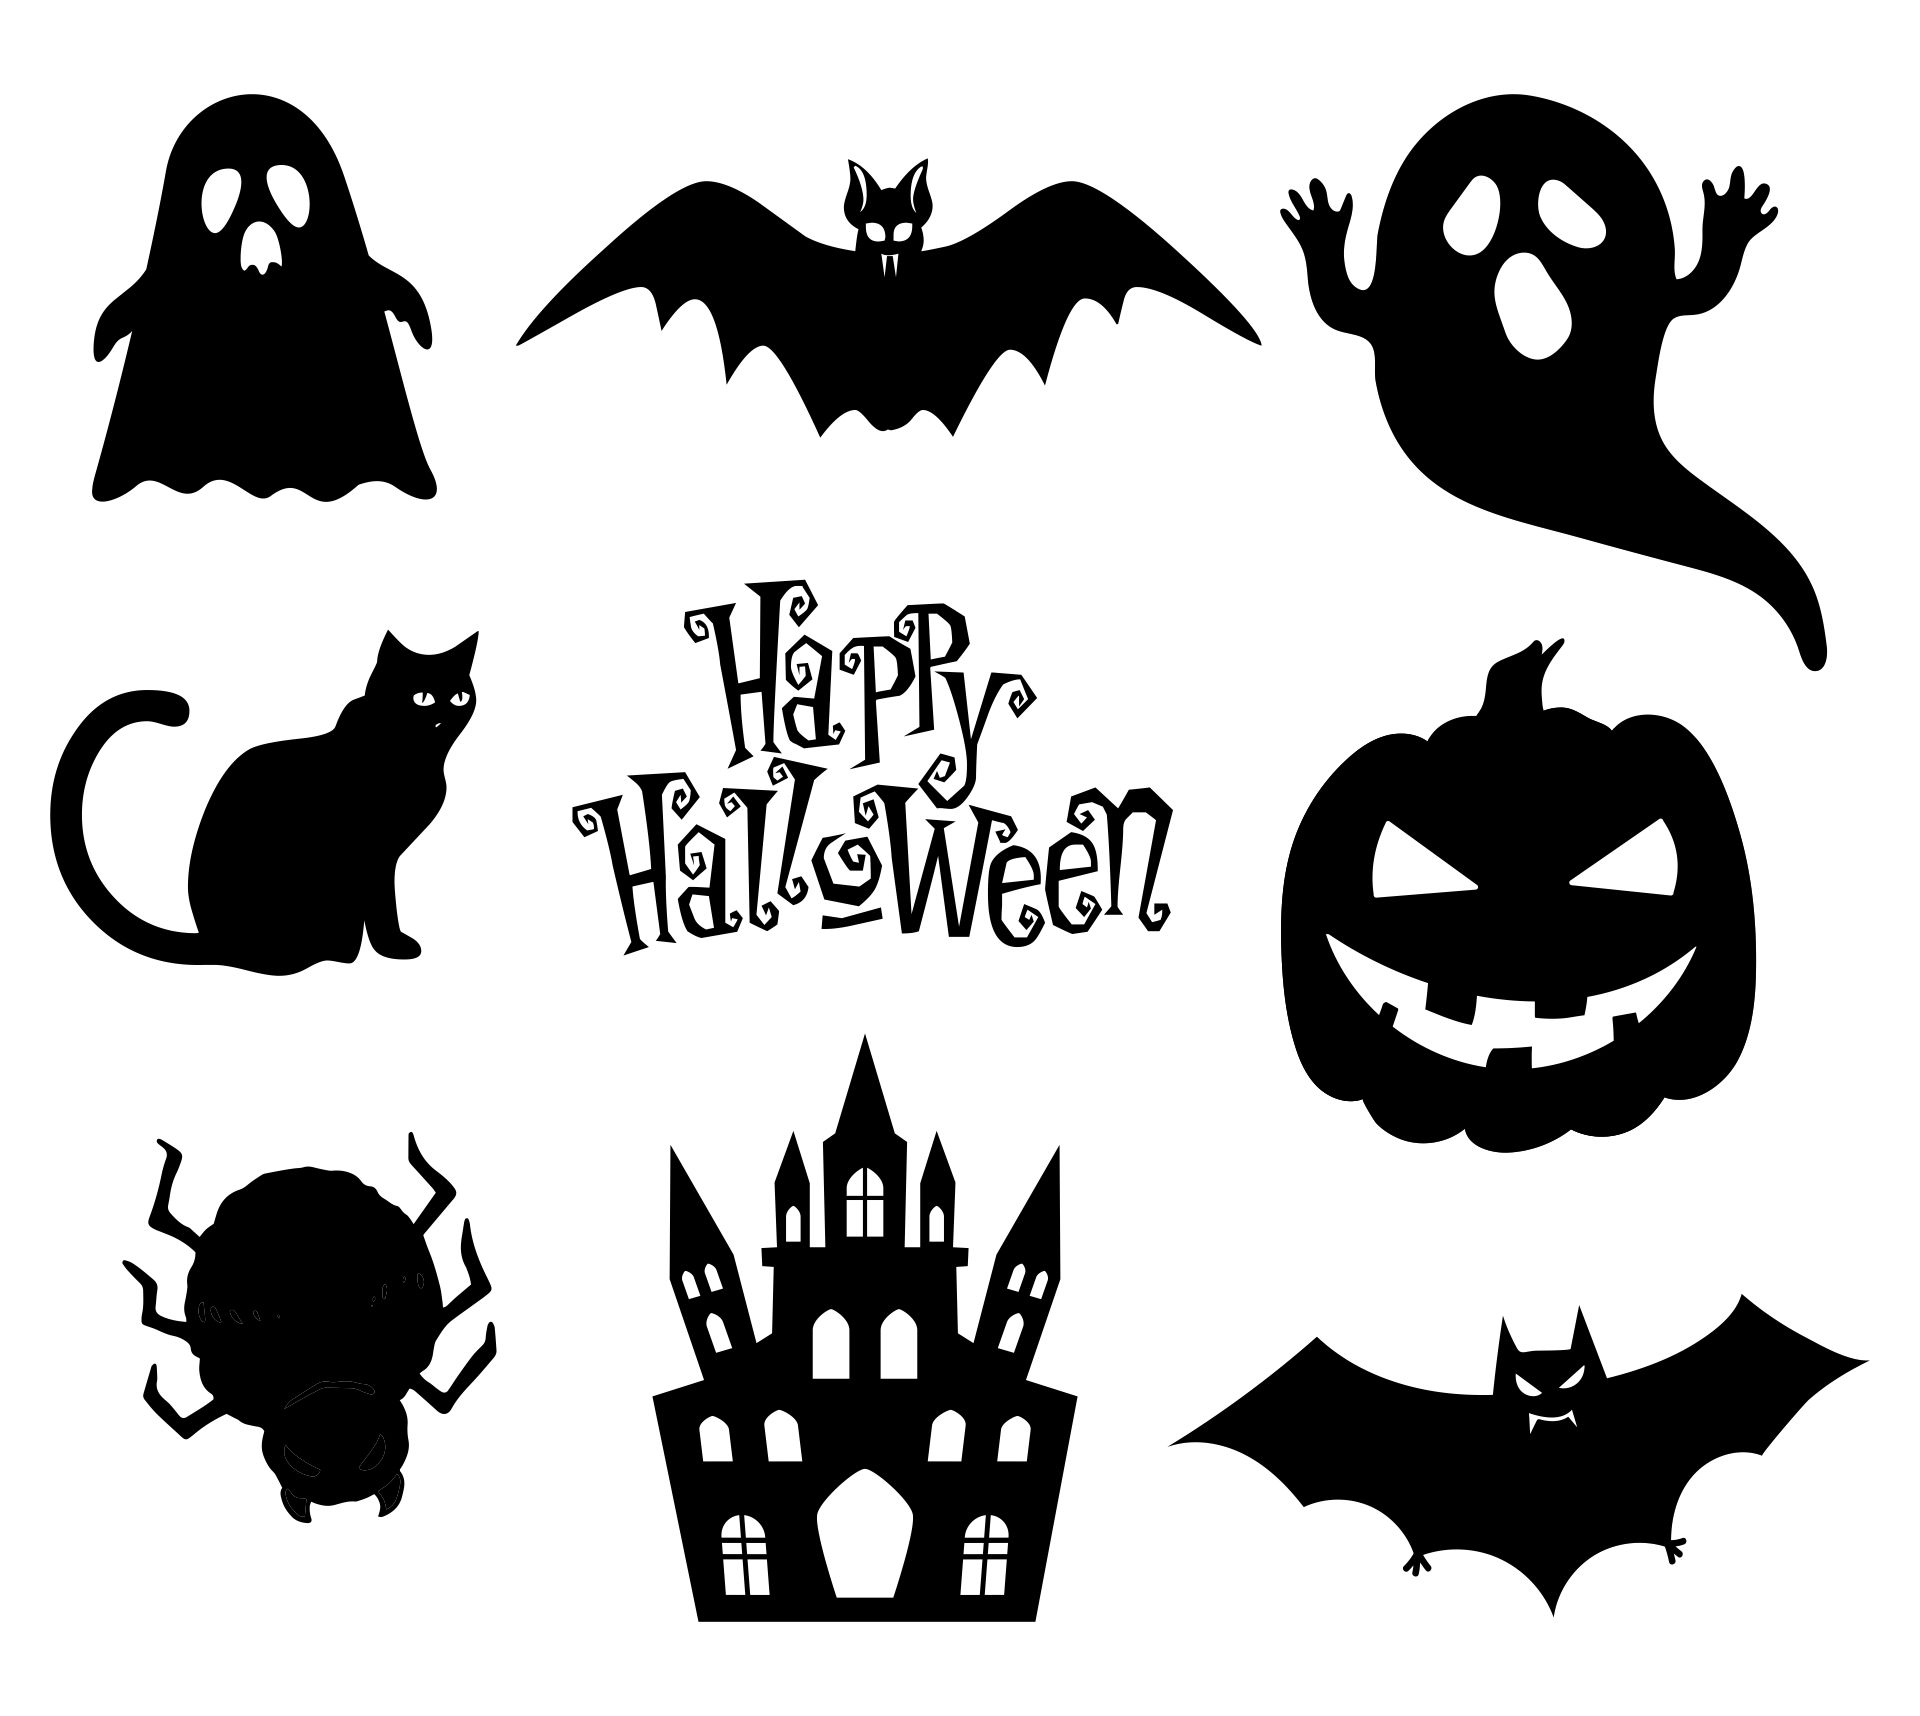 15 Best Printable Halloween Silhouettes